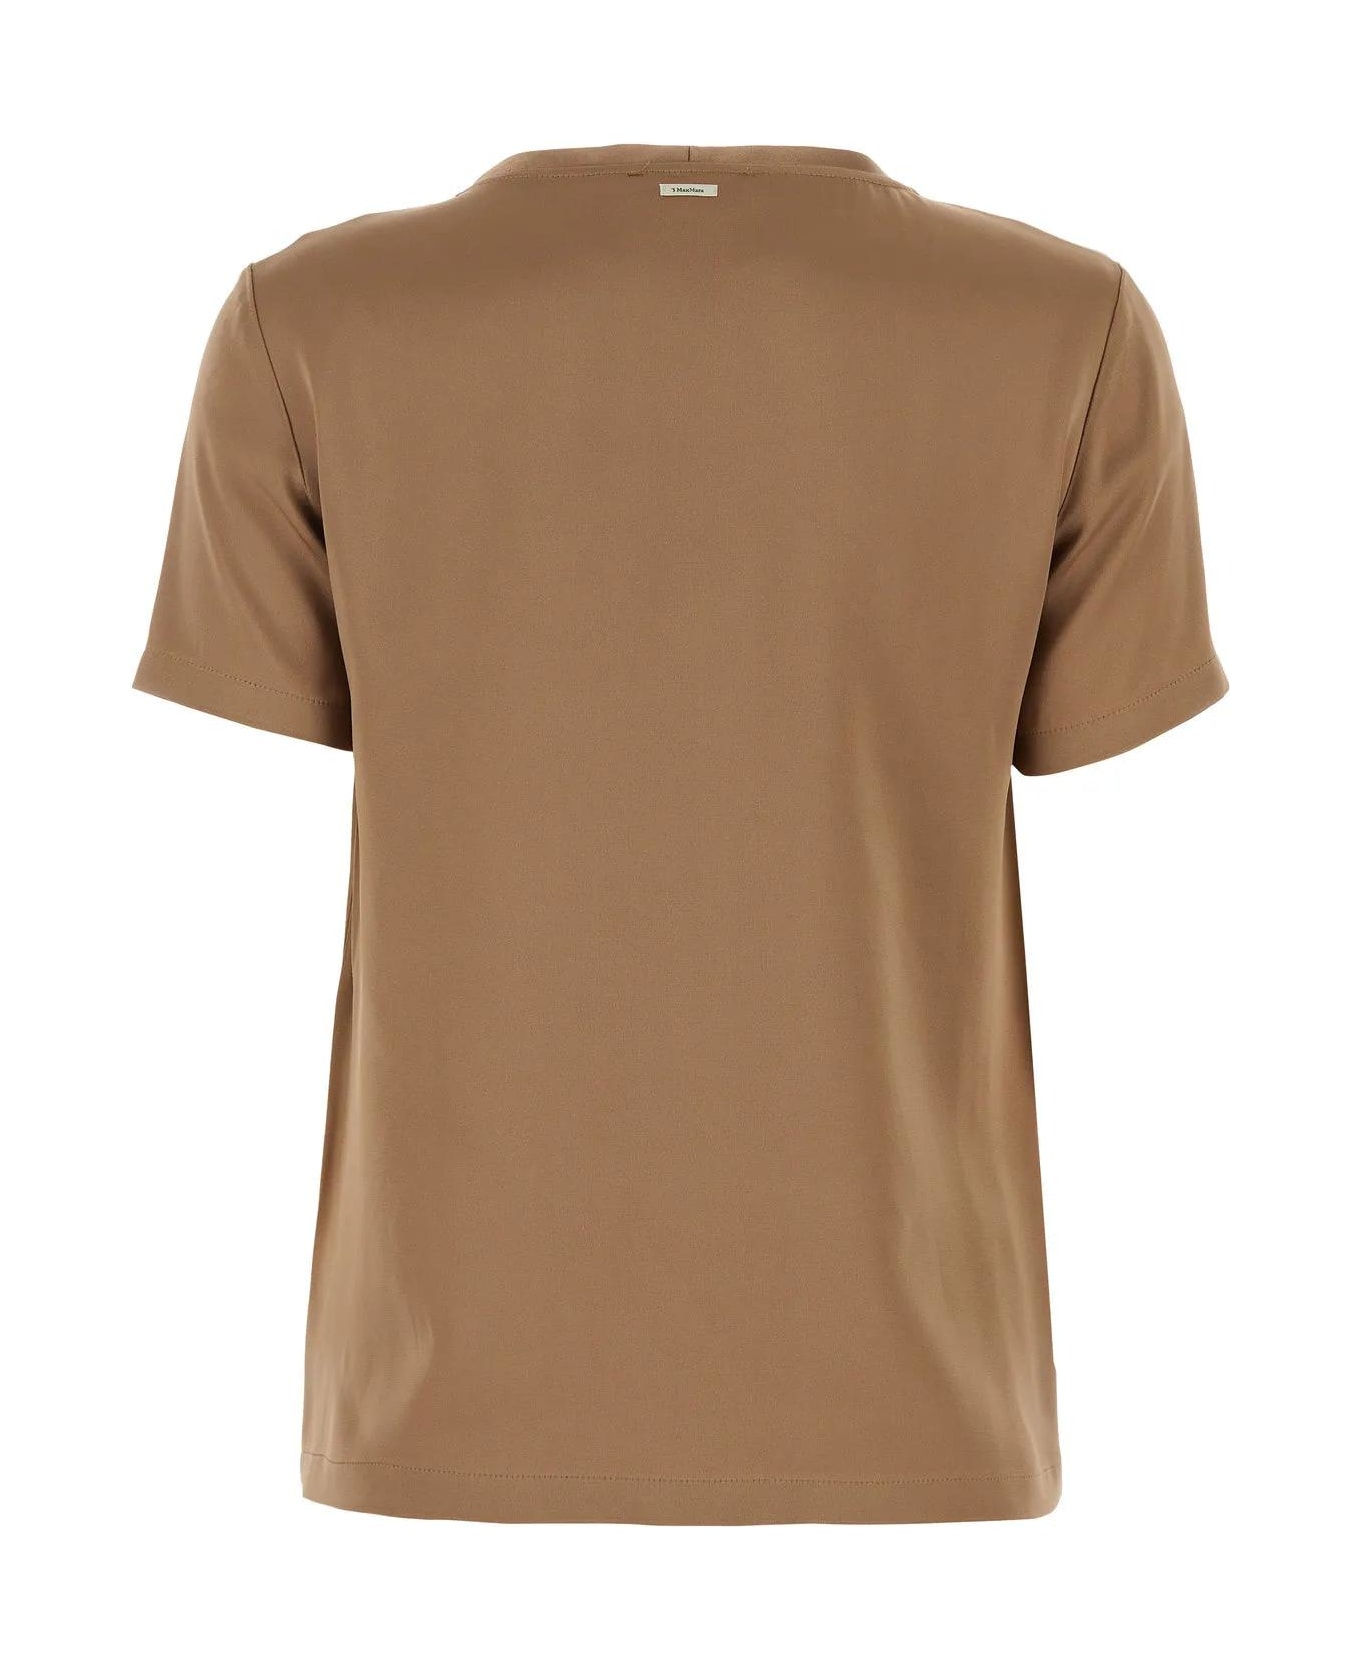 'S Max Mara Biscuit Satin Rebecca T-shirt - Cammello Tシャツ